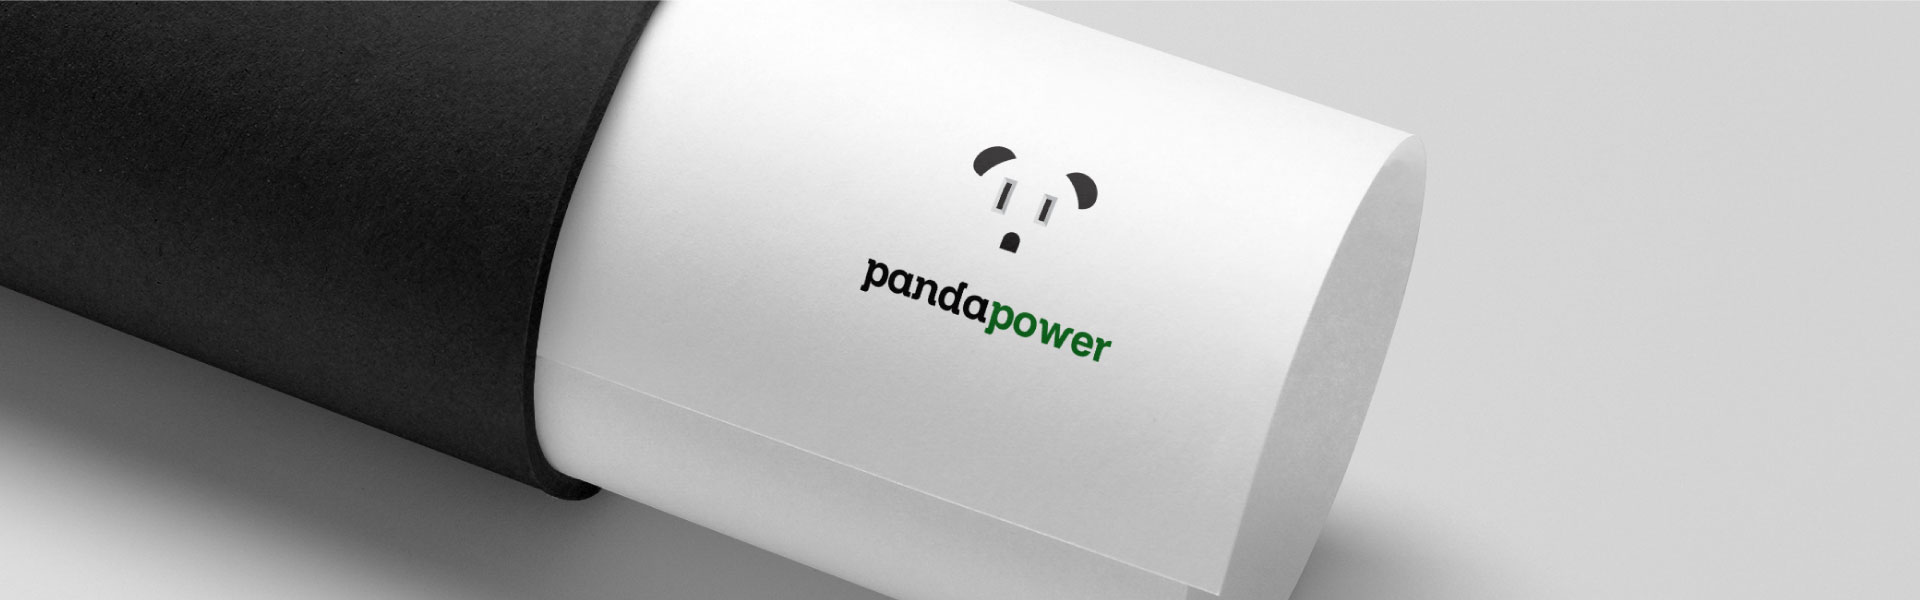 panda-power-design-by-mapleweb-vancouver-canada-header-image